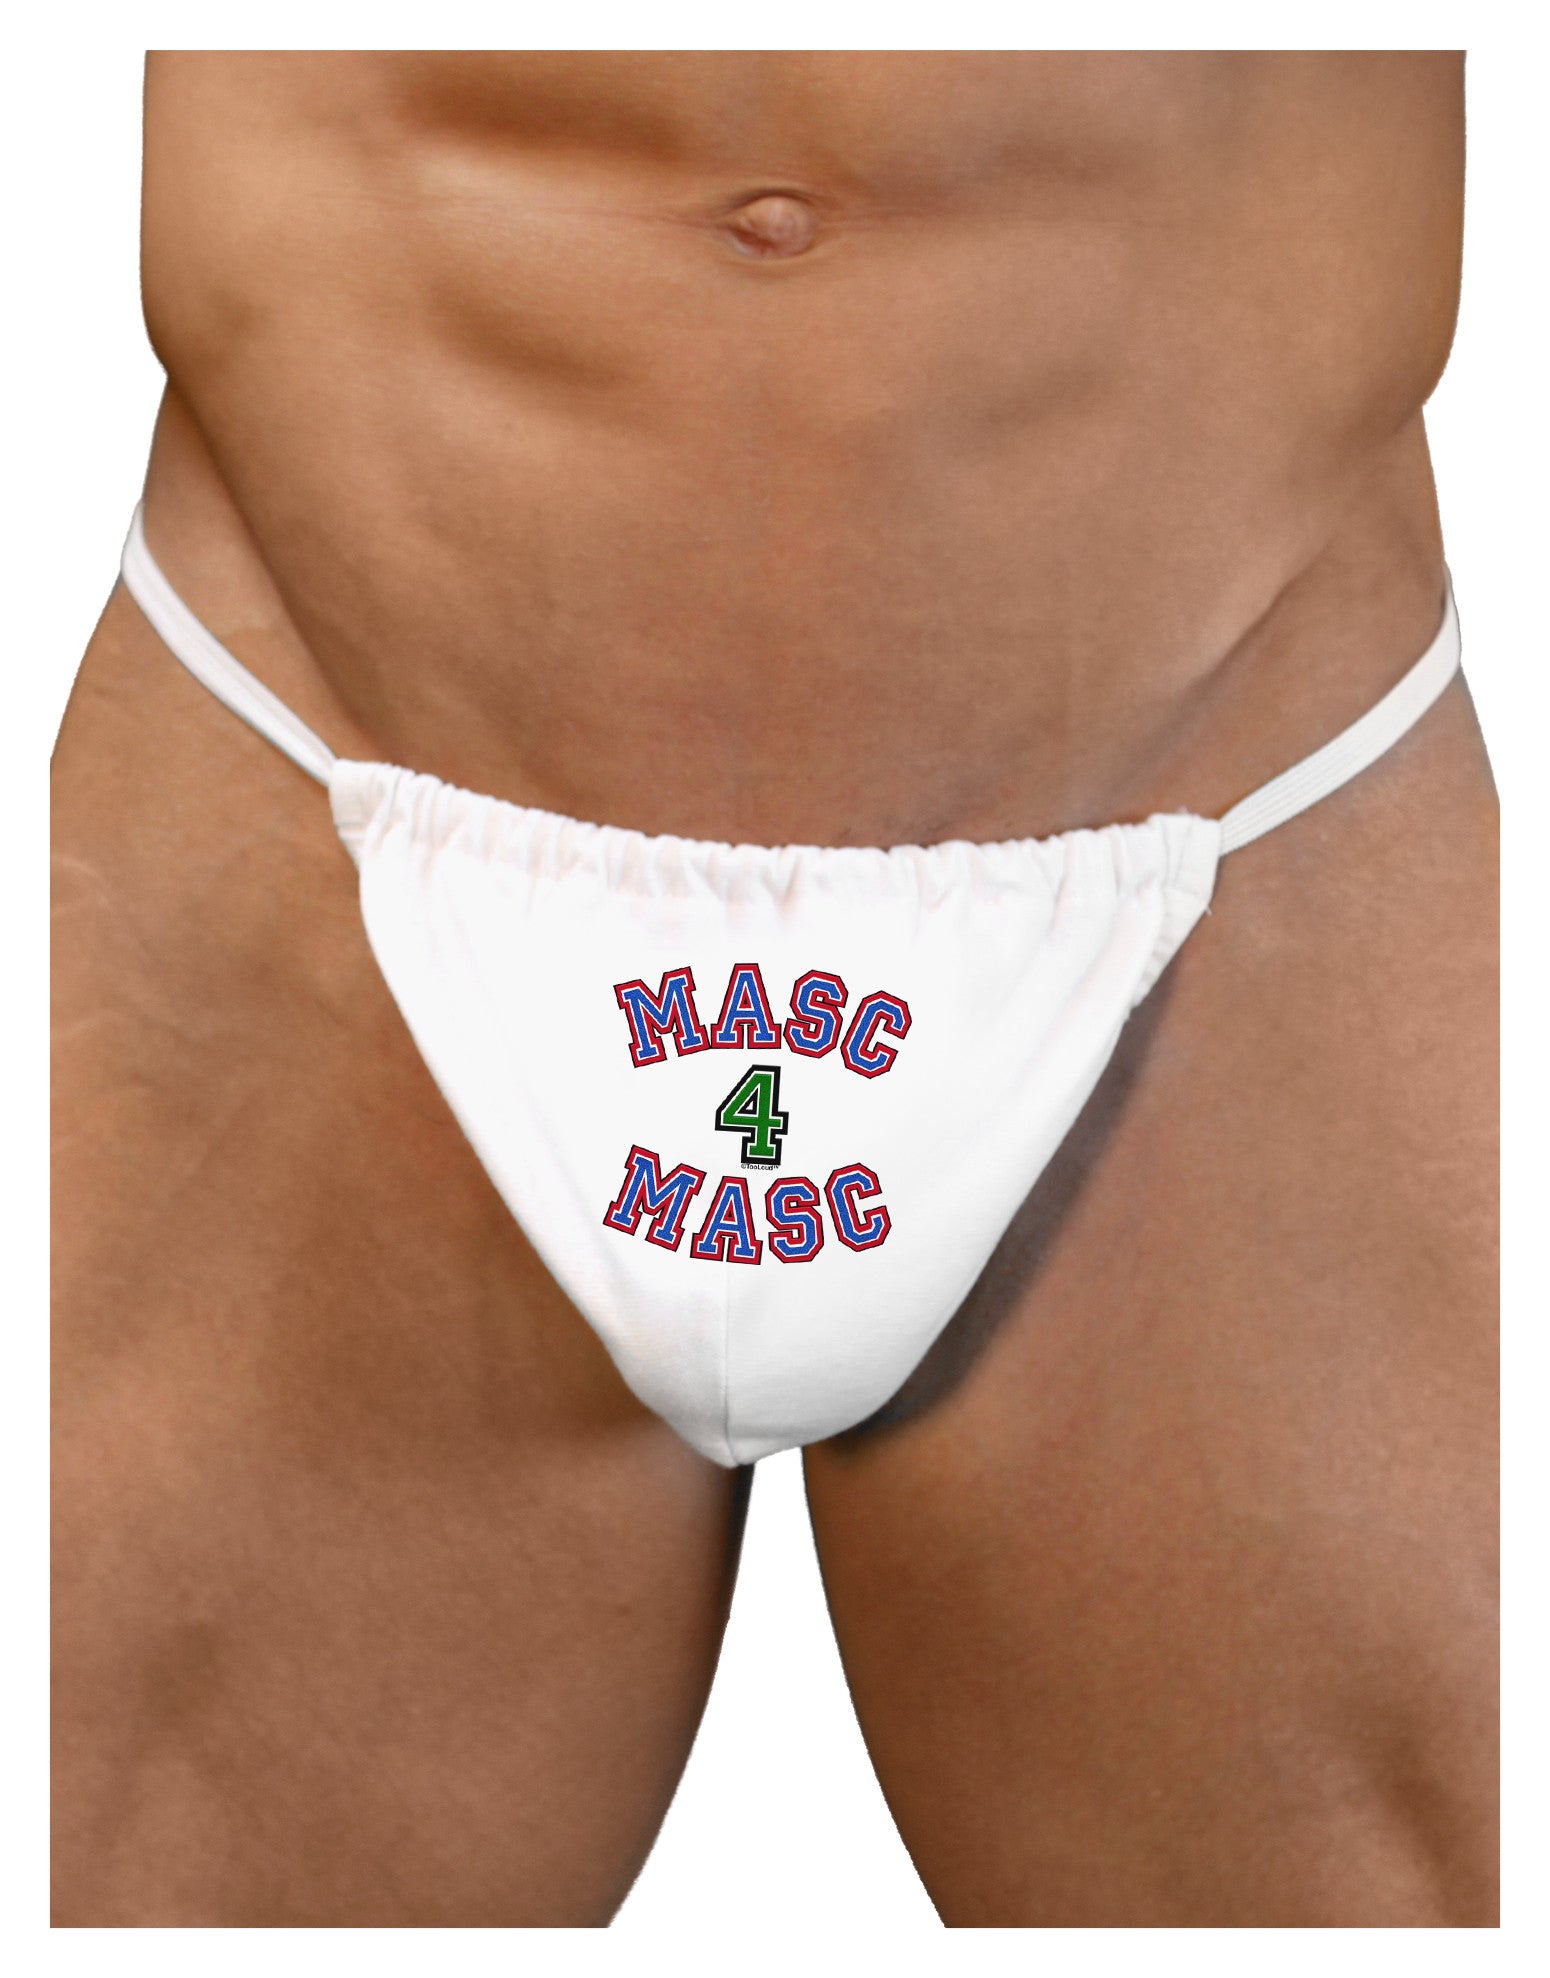 Masc 4 Masc College Stud Mens G-String Underwear by LOBBO - Davson